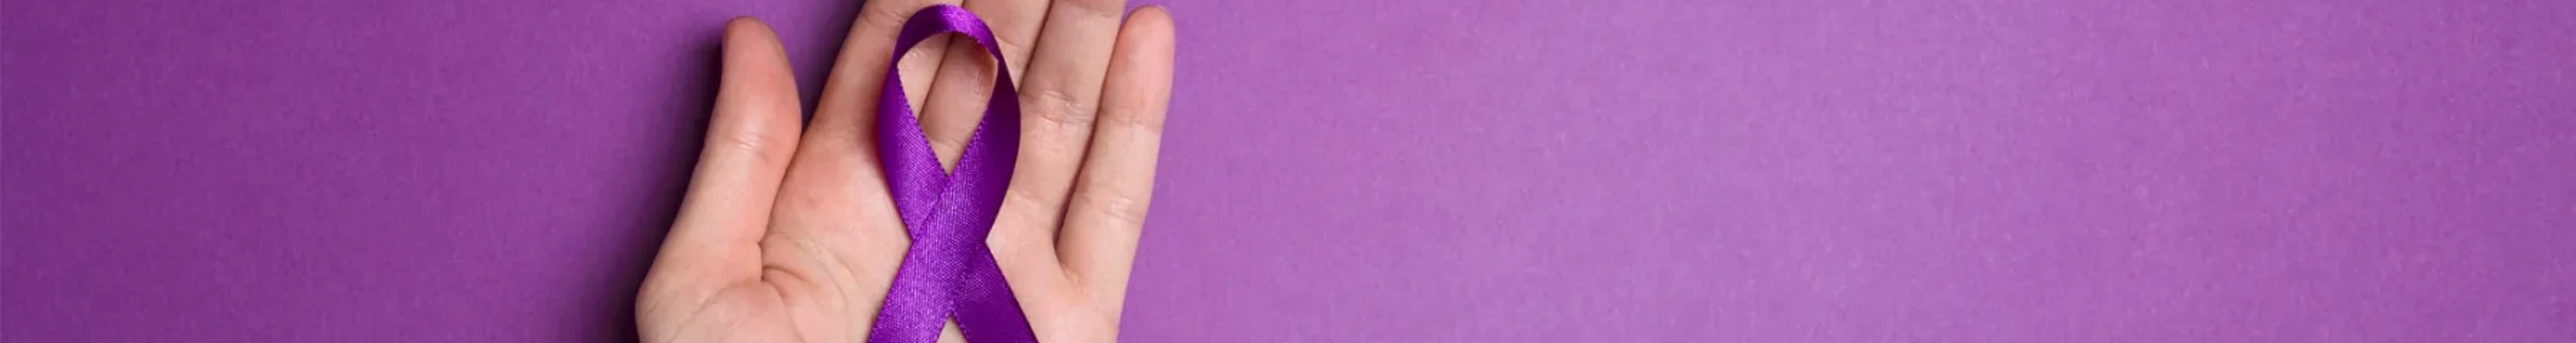 Hand holding purple ribbon on a purple background (resized)